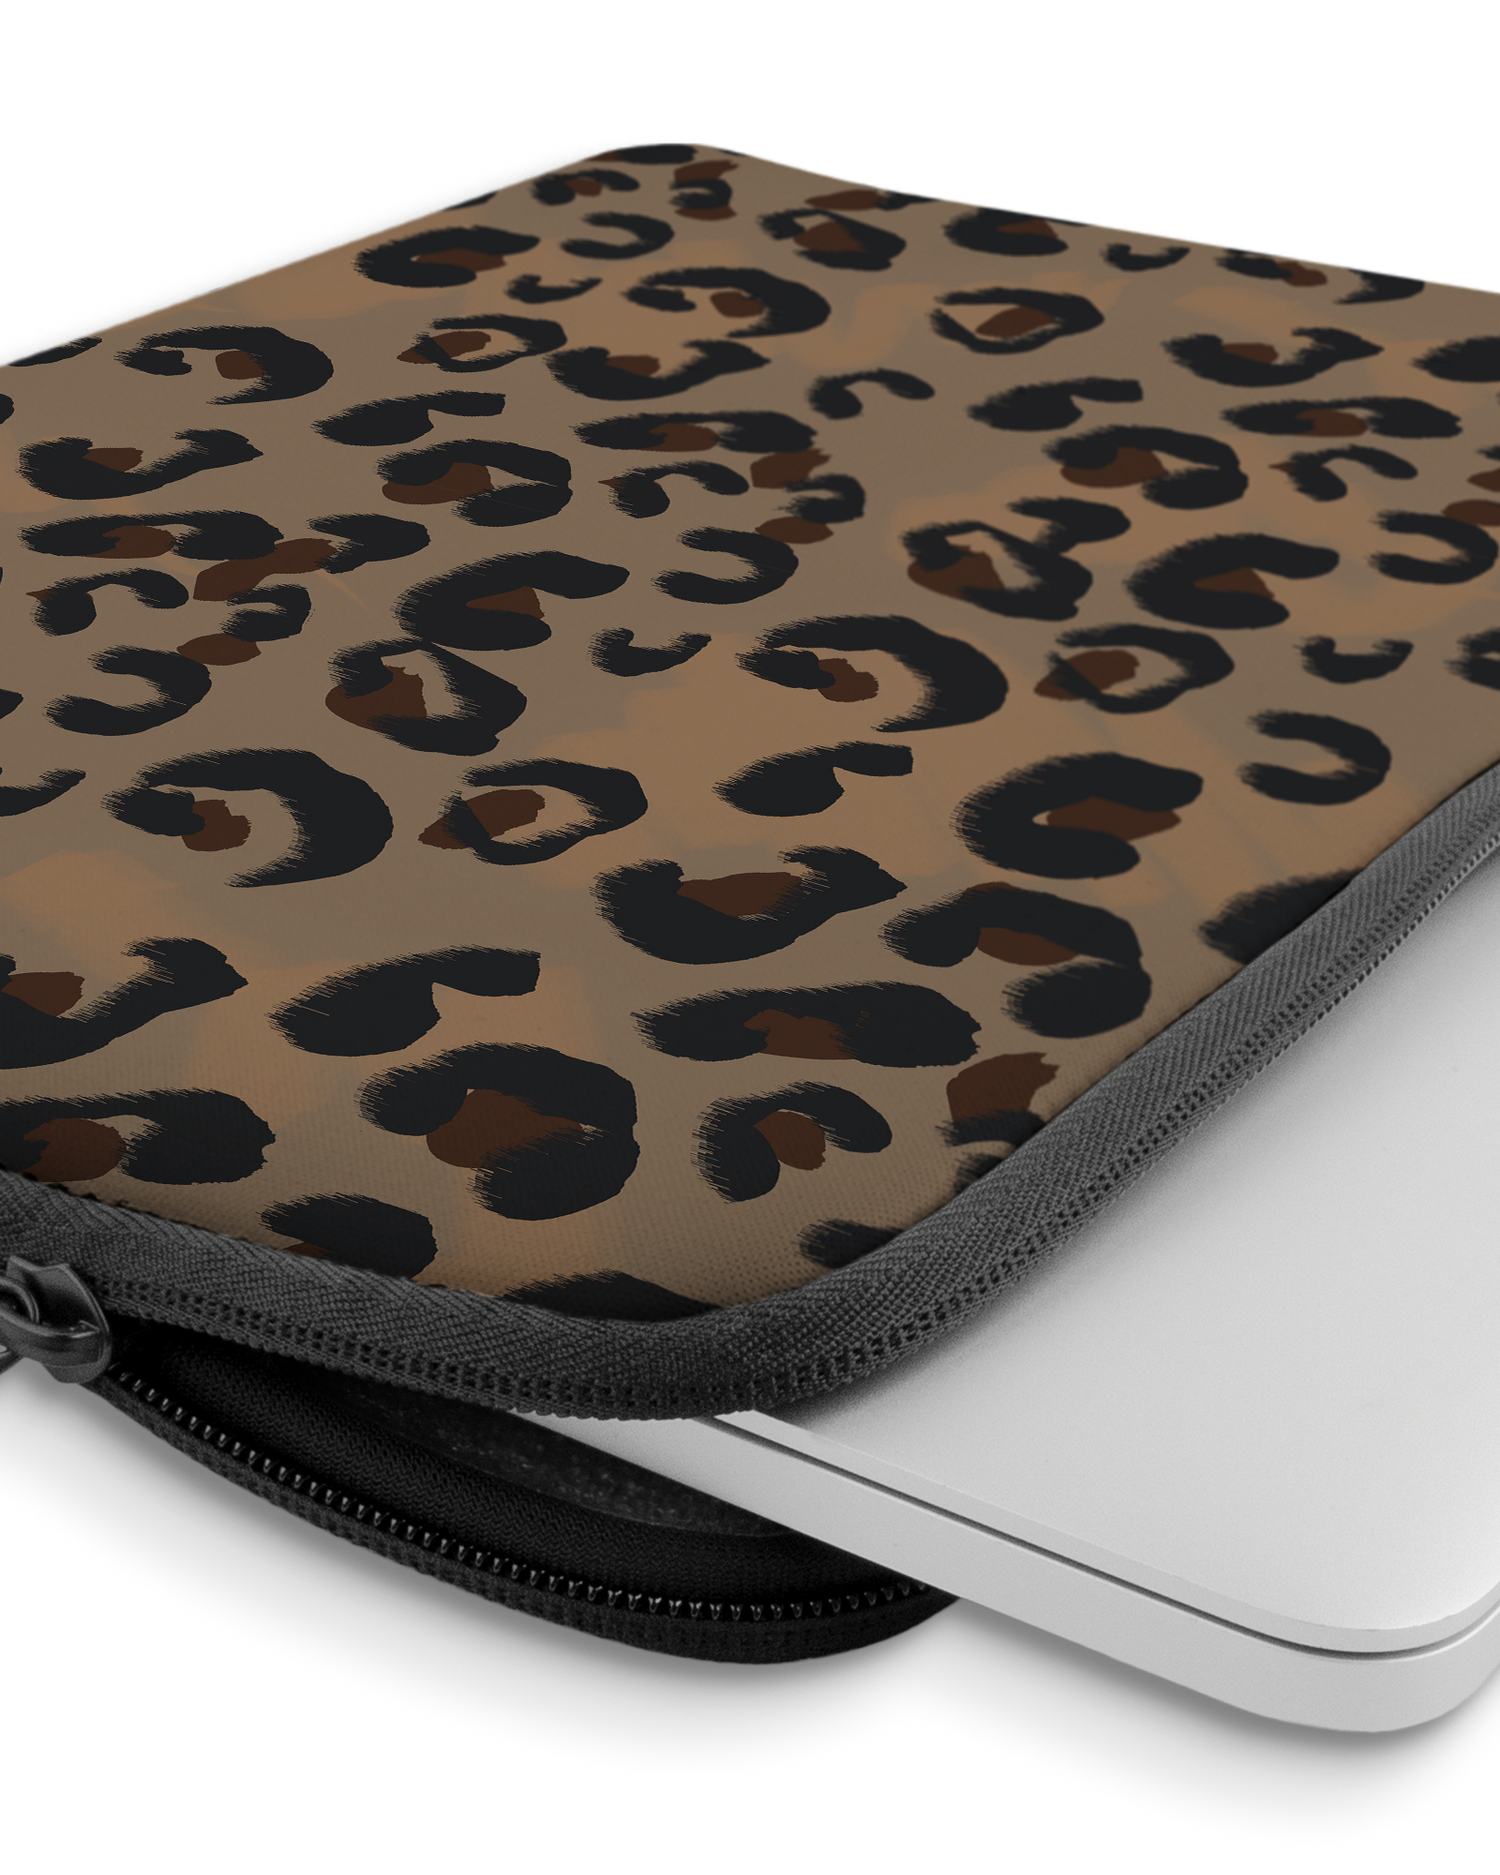 Leopard Repeat Laptophülle 13-14 Zoll mit Gerät im Inneren